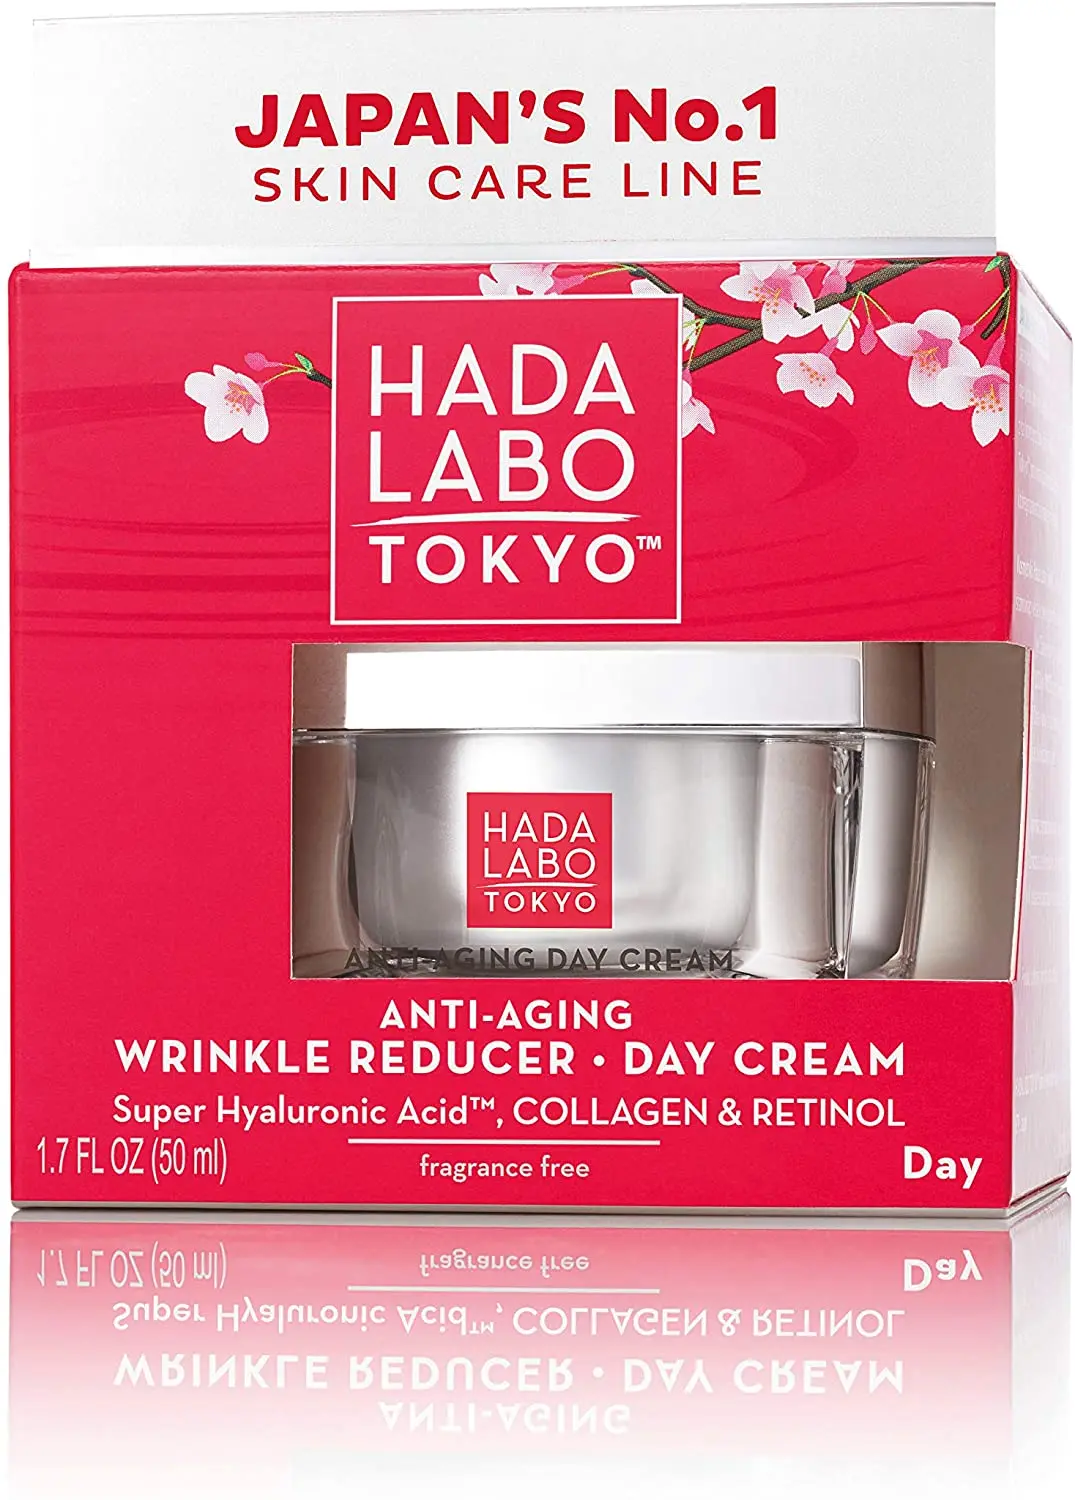 

Hada Labo Tokyo Anti-Aging Wrinkle Reducer - Day Cream 1.7 FL OZ 50 ml